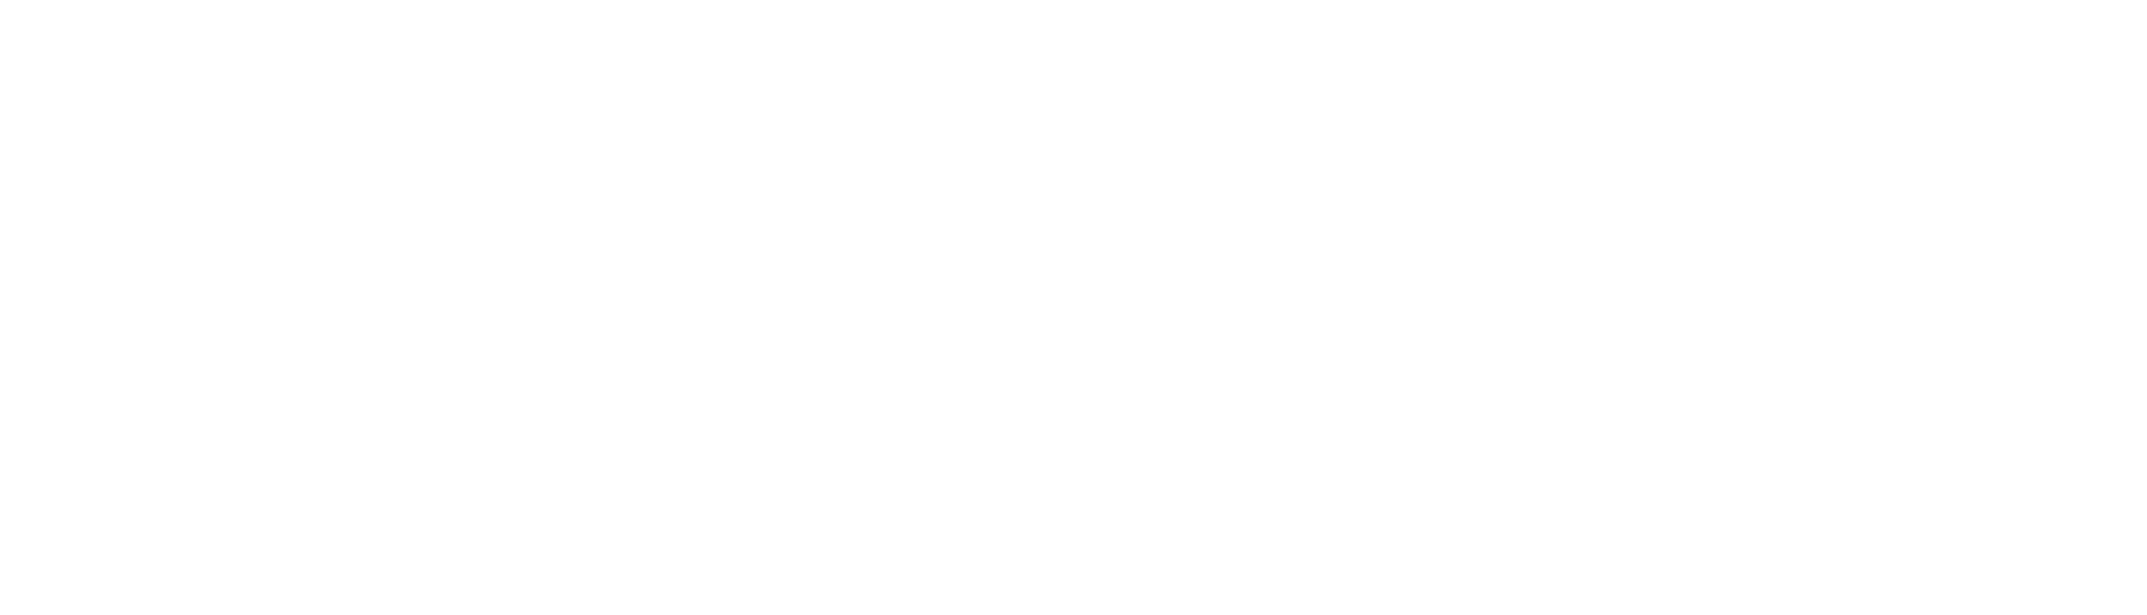 International Minerals Innovation Institute